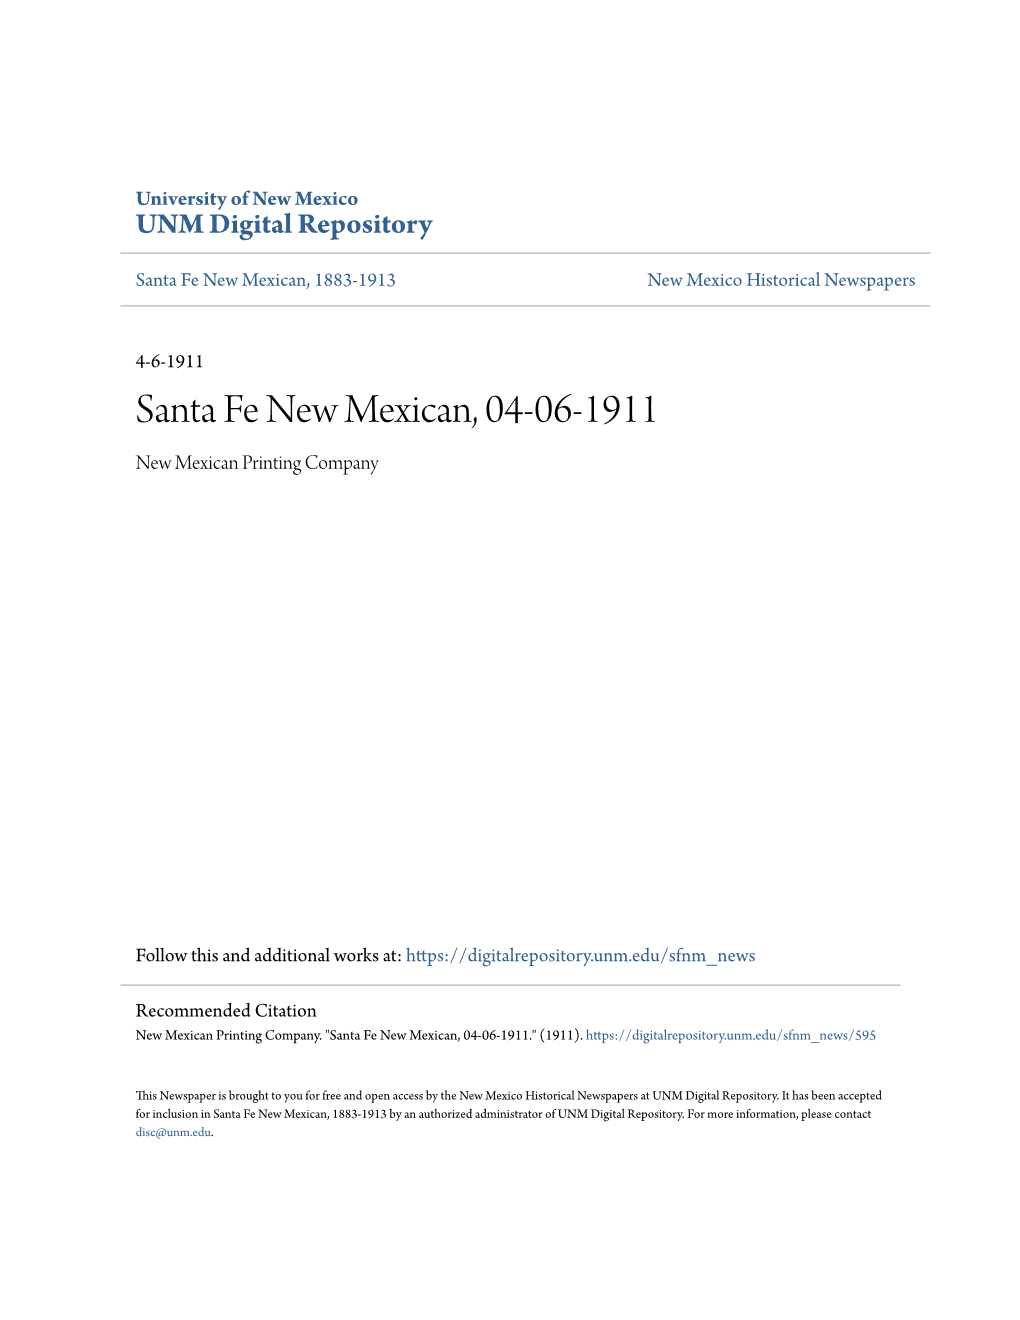 Santa Fe New Mexican, 04-06-1911 New Mexican Printing Company